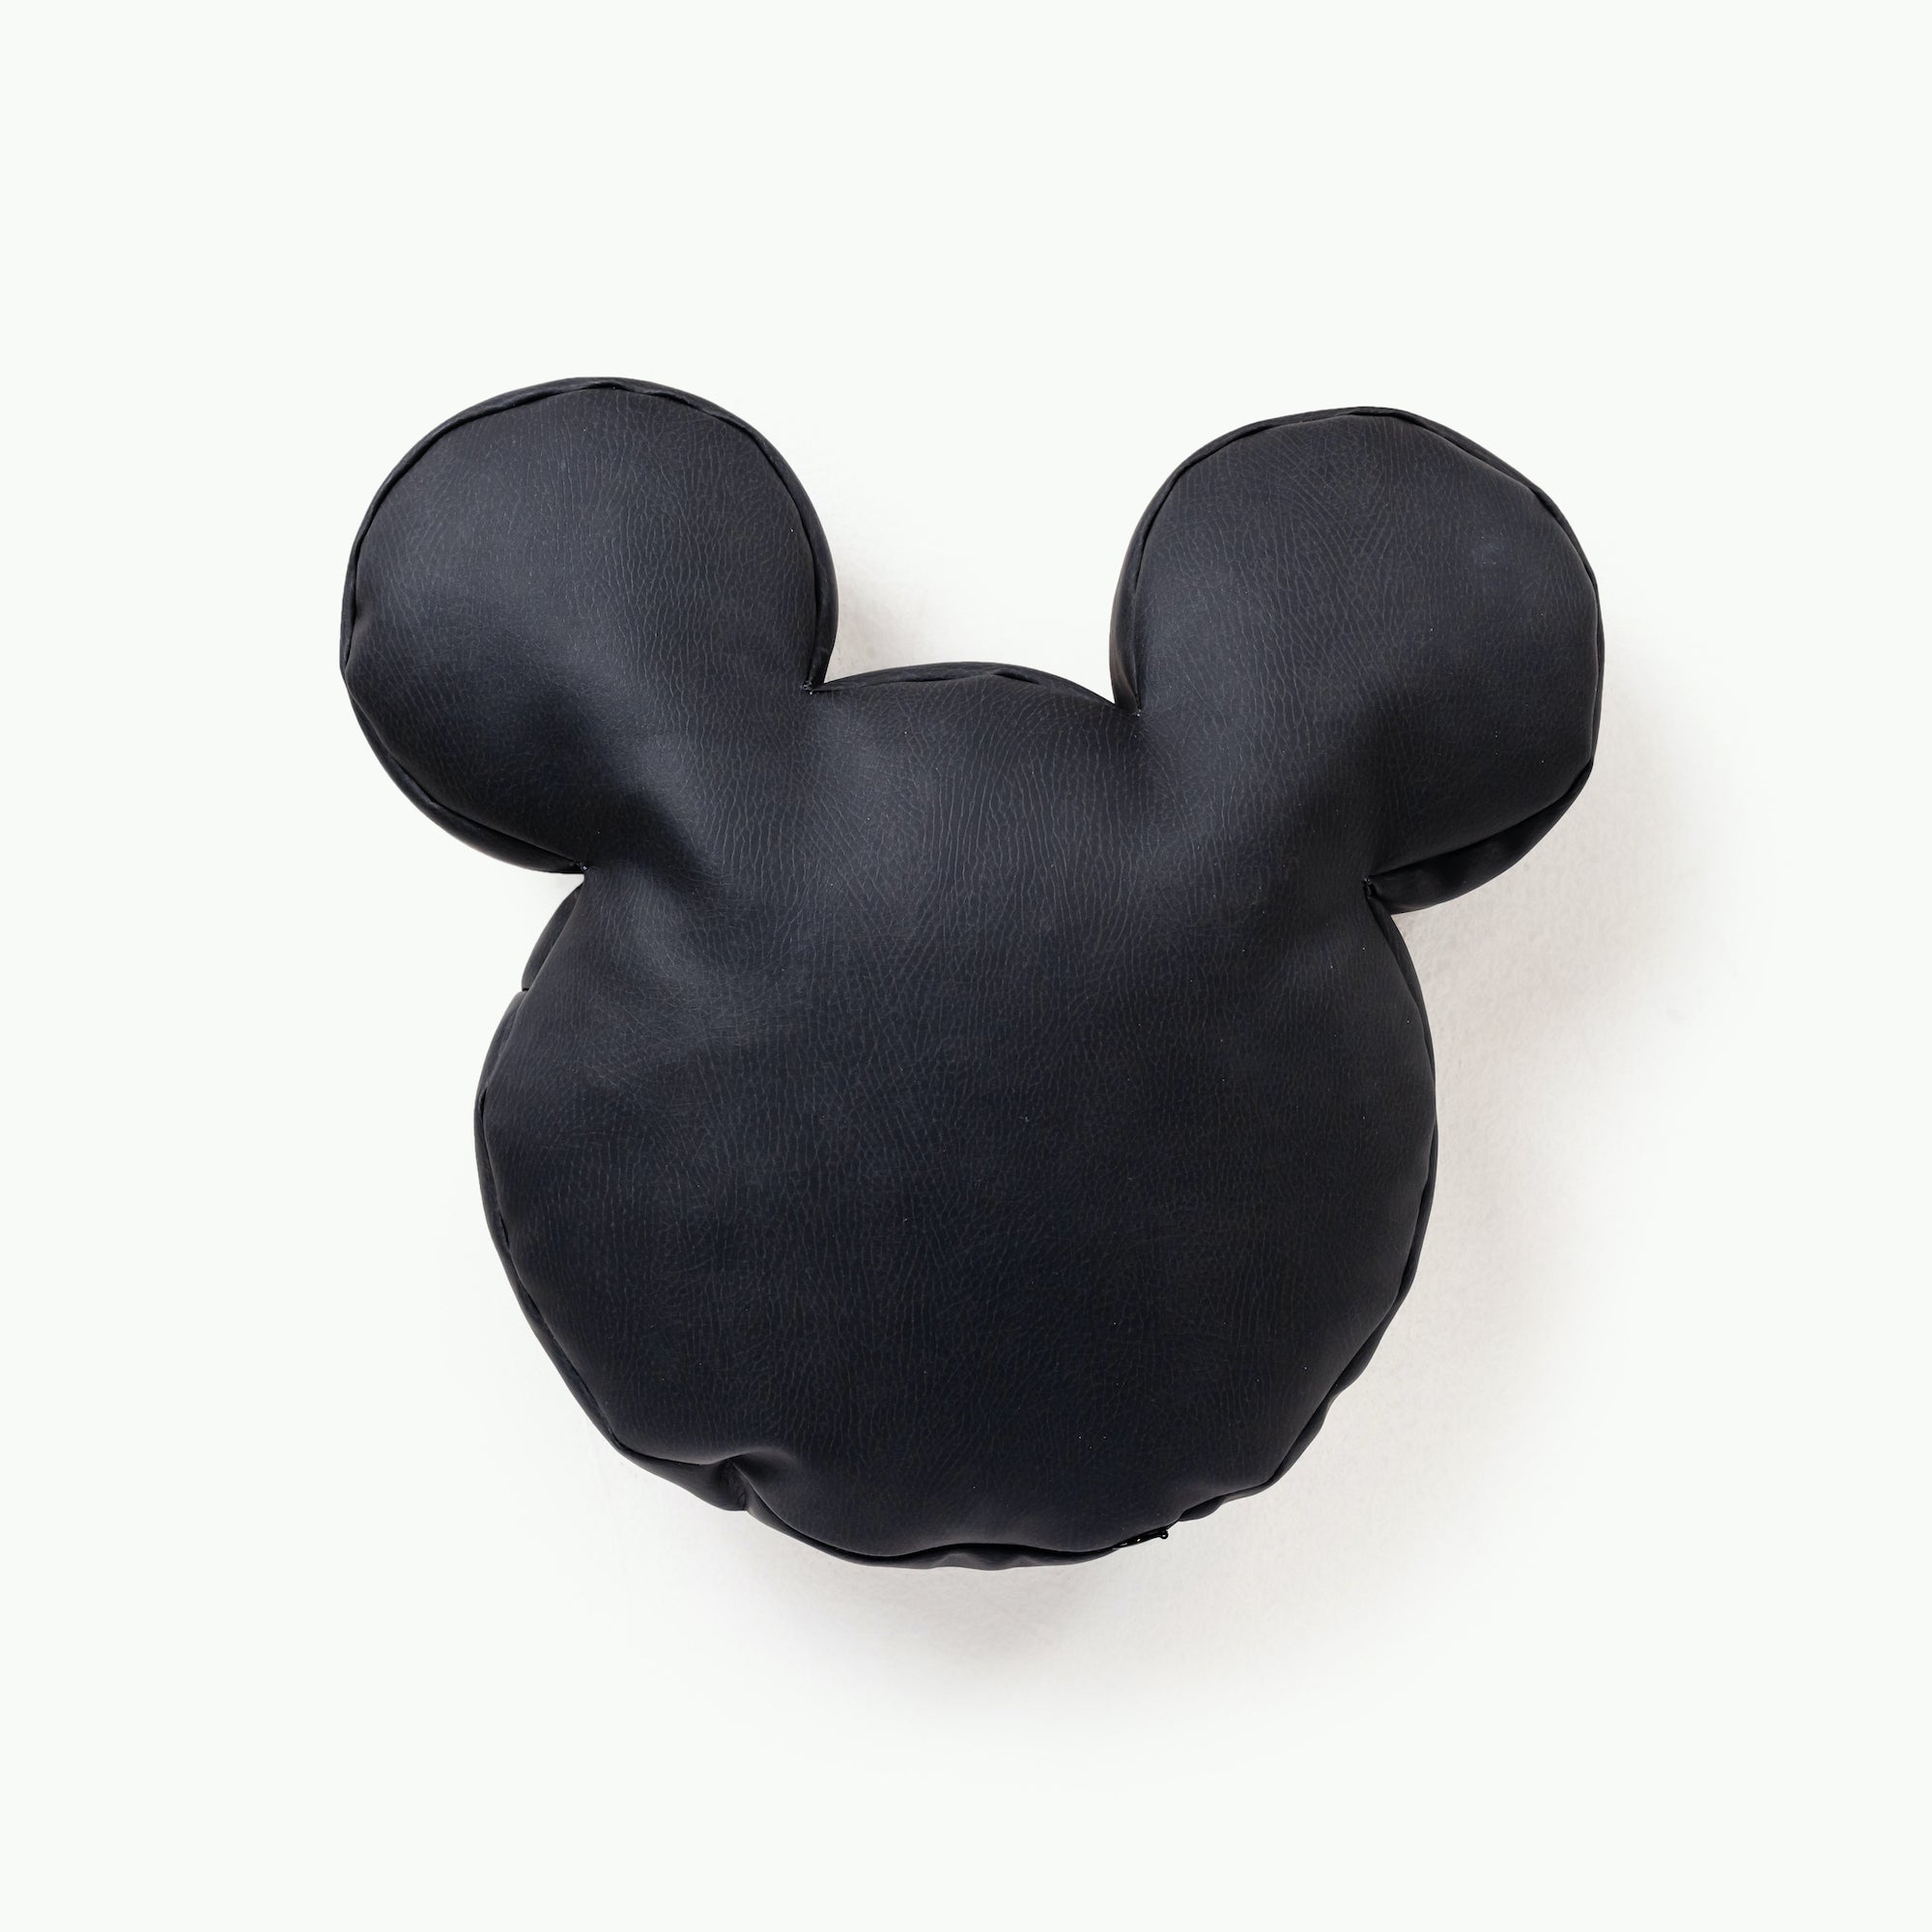 Raven (on sale)@Raven Mickey Mouse Pillow